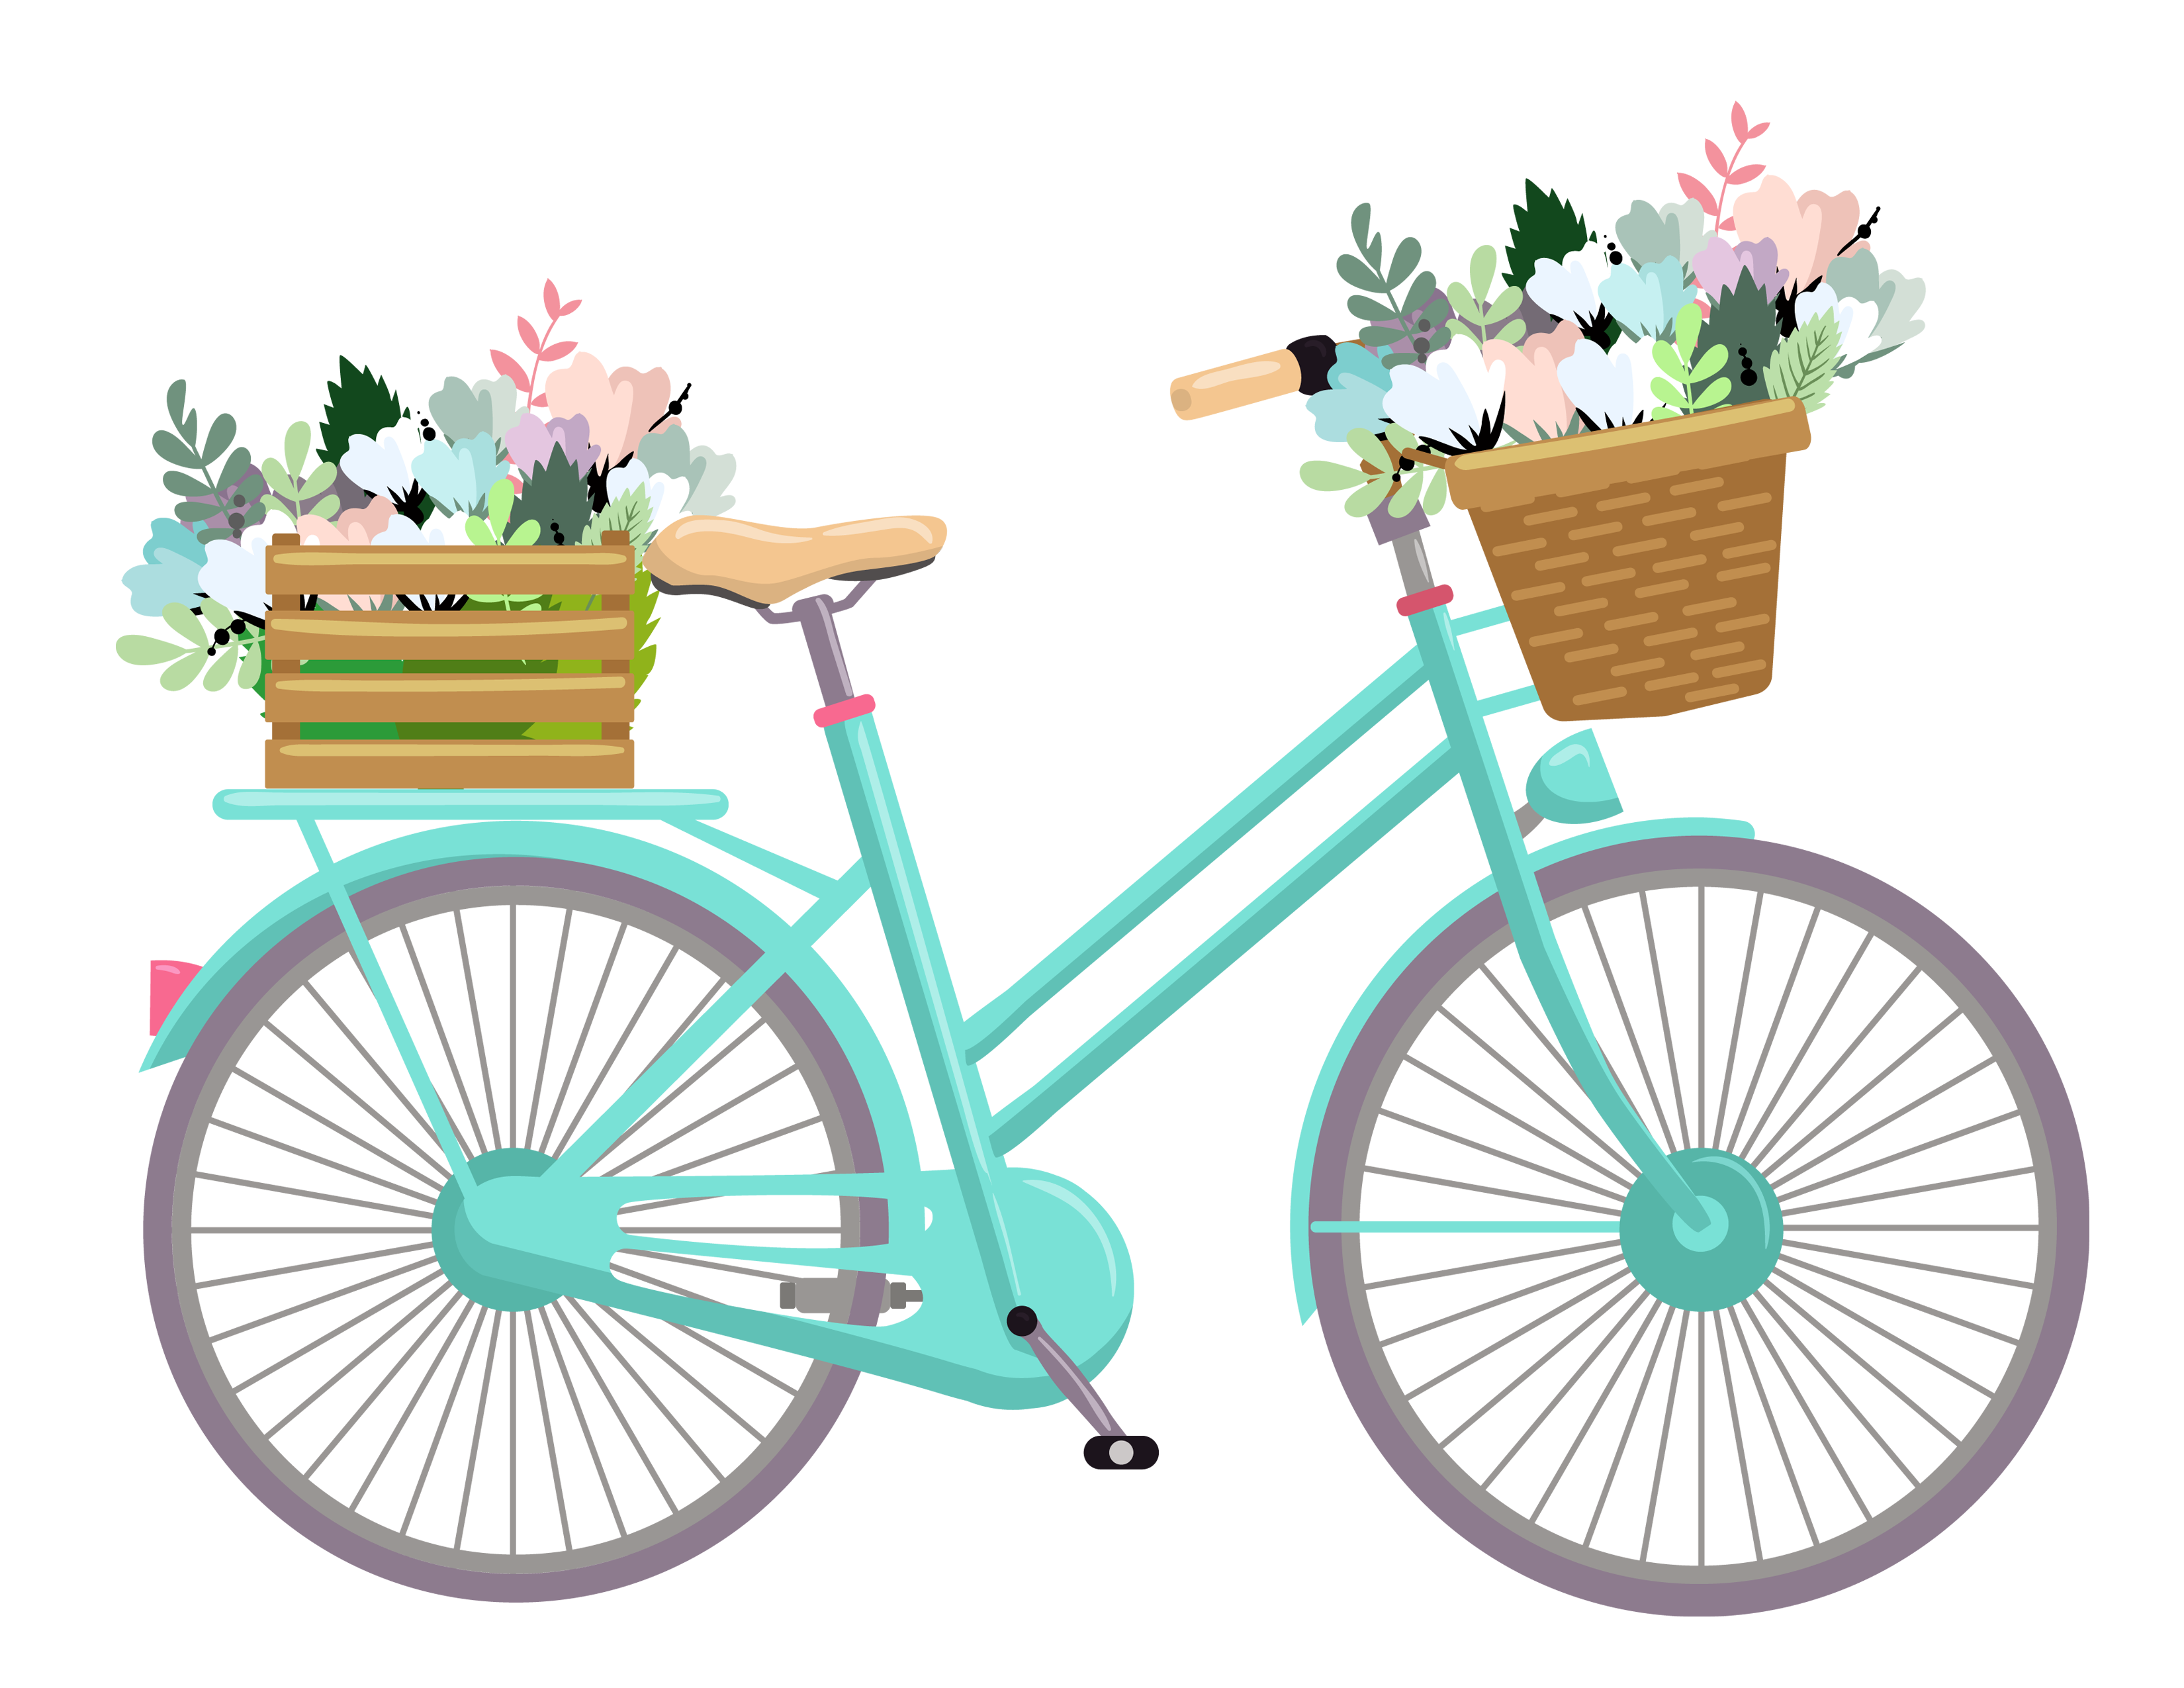 Free Romantic Bicycle Clip Art Set